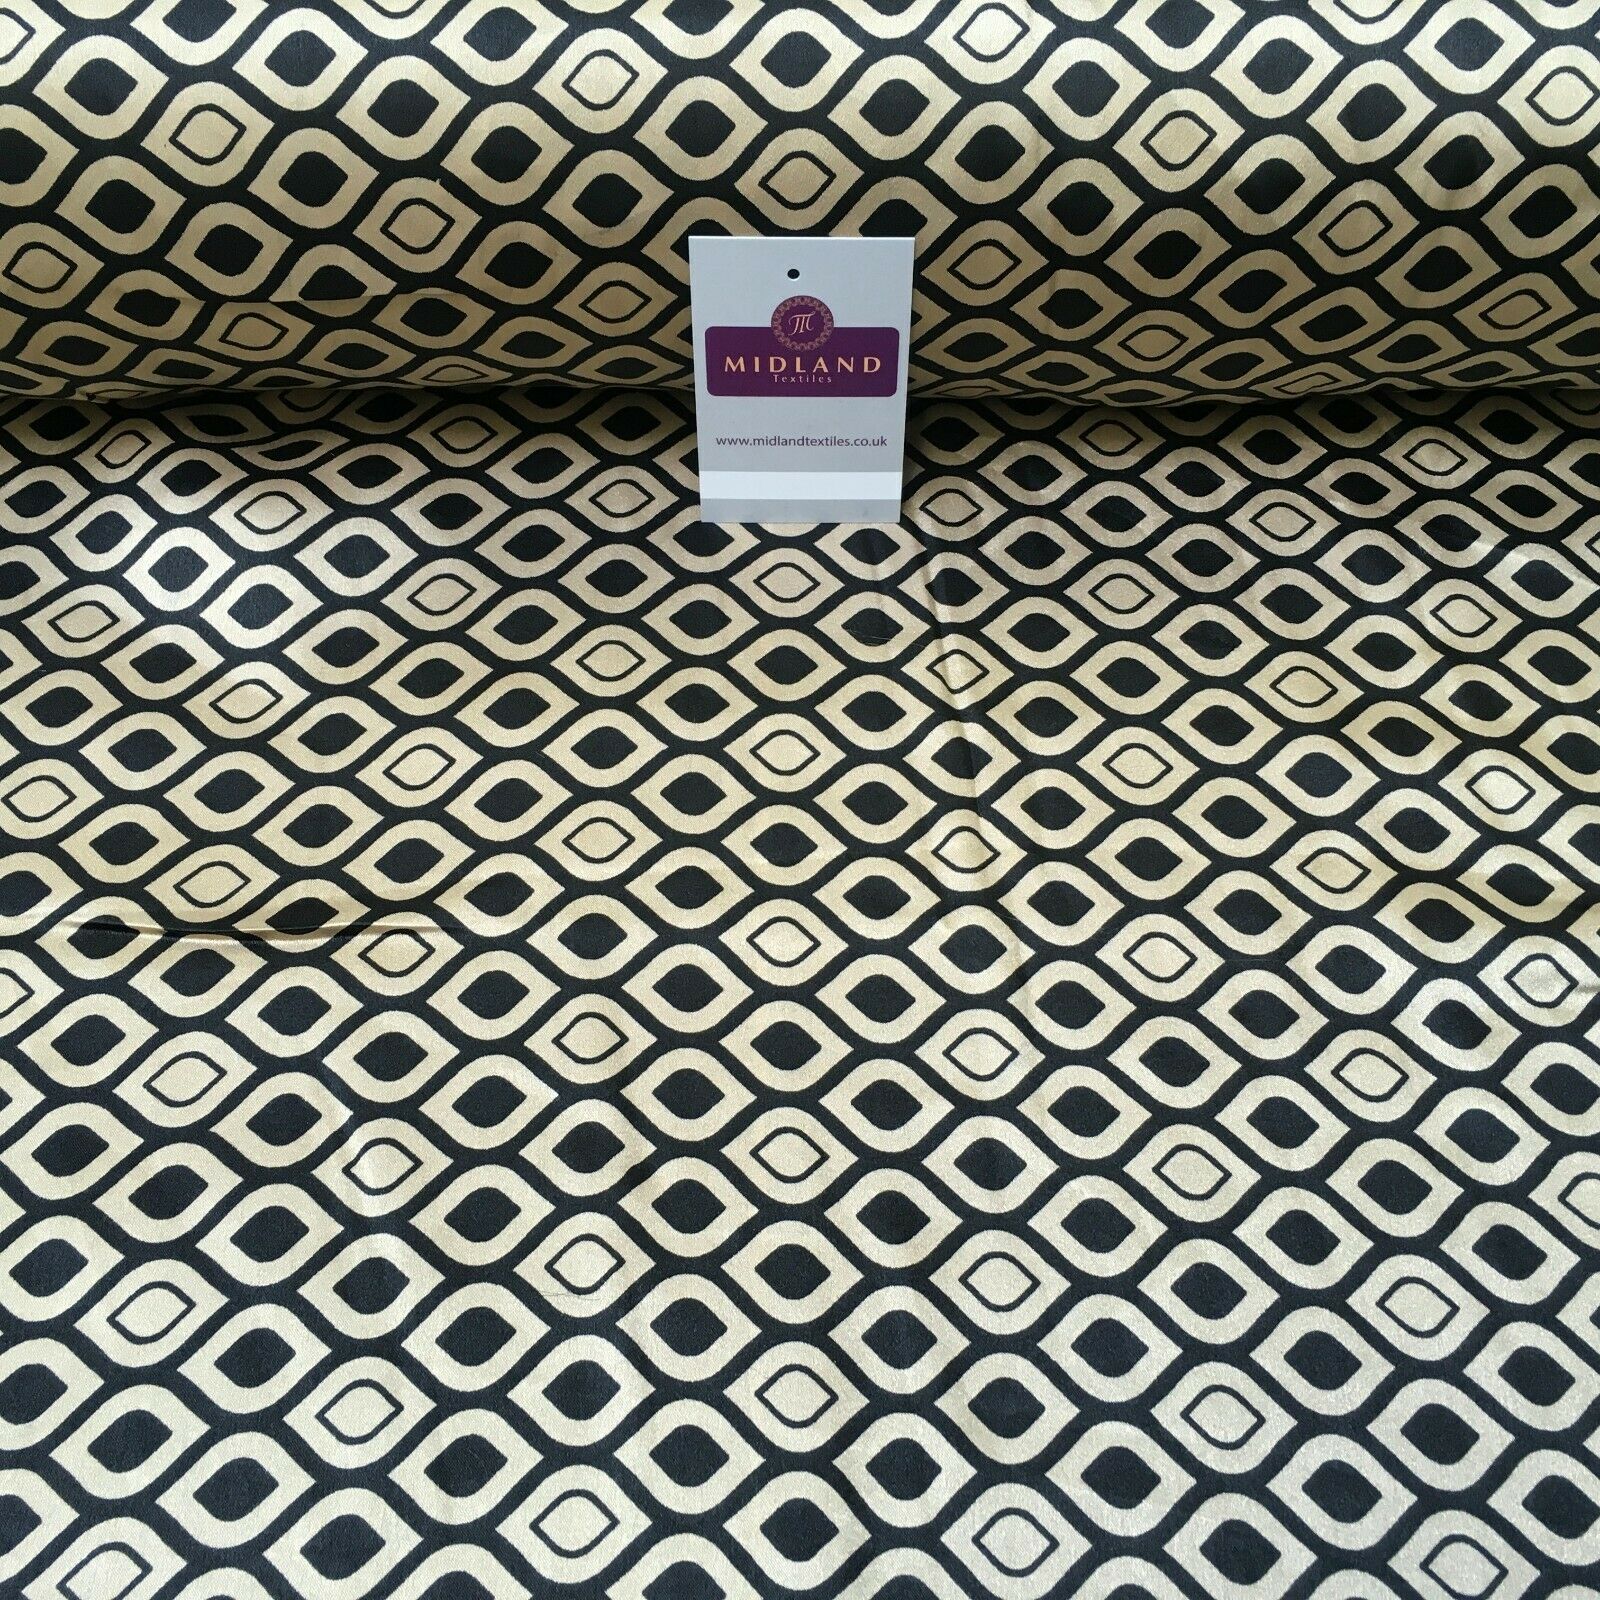 Black and Gold Geometric Printed Silky Satin Dress Fabric 150cm Wide MR1044-2